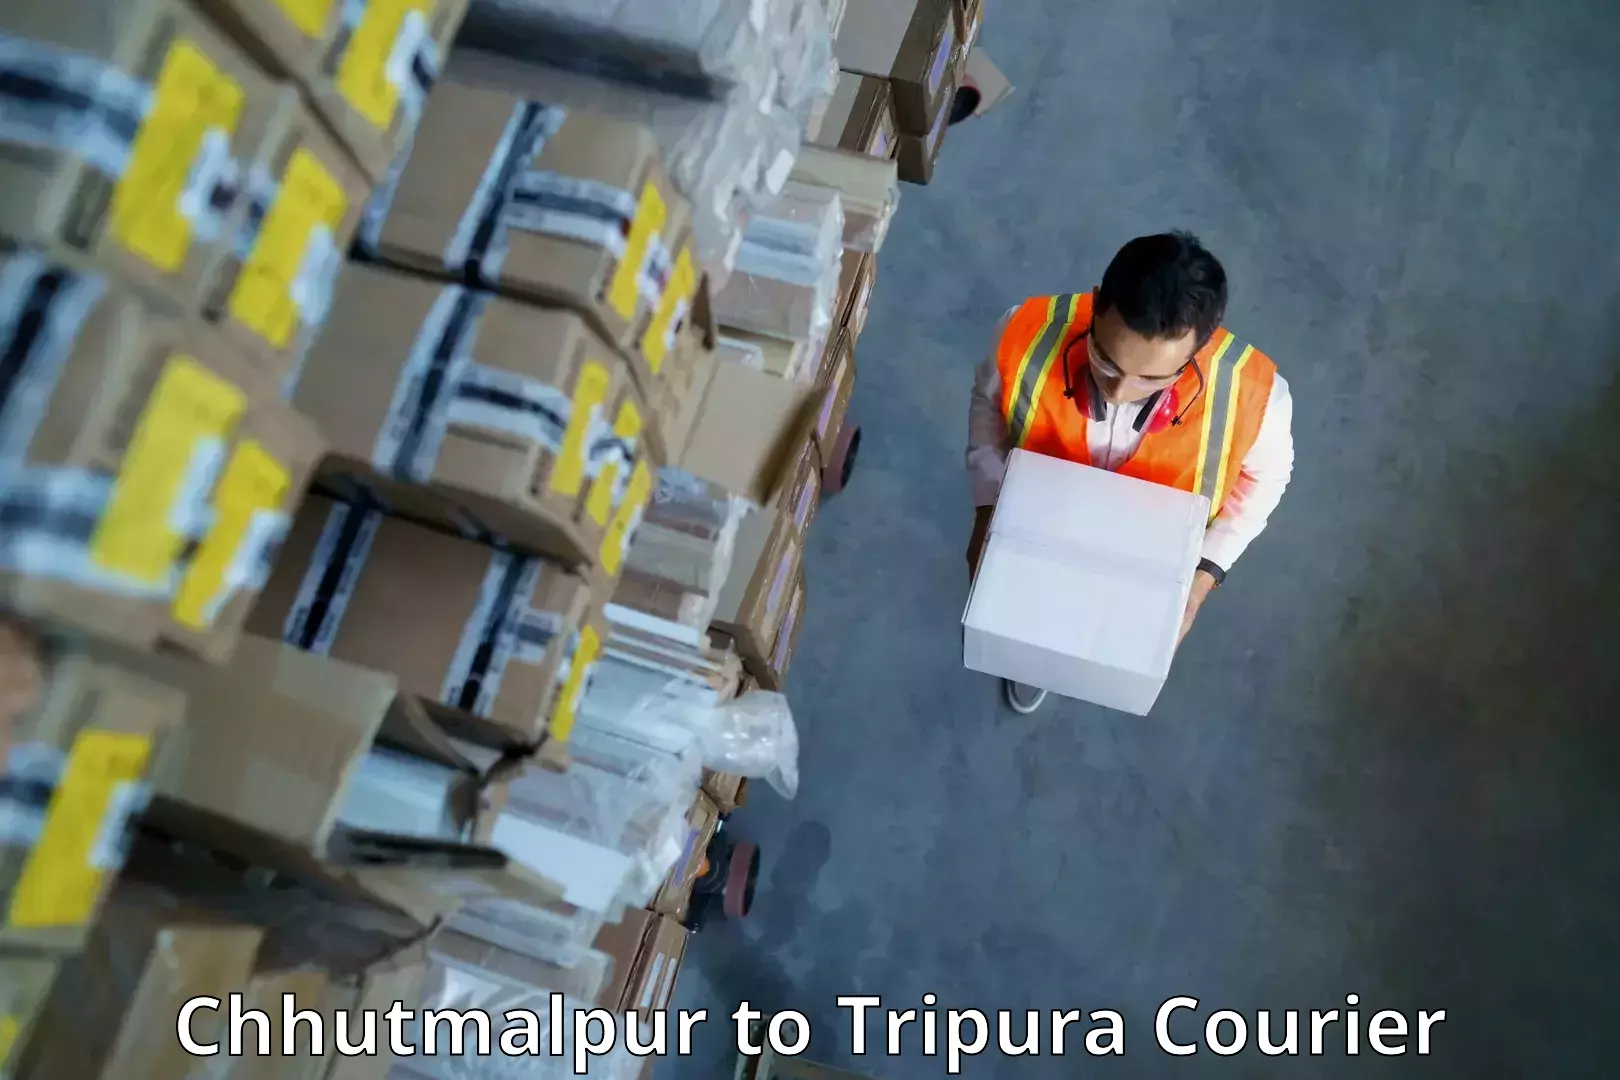 Ground shipping in Chhutmalpur to Agartala